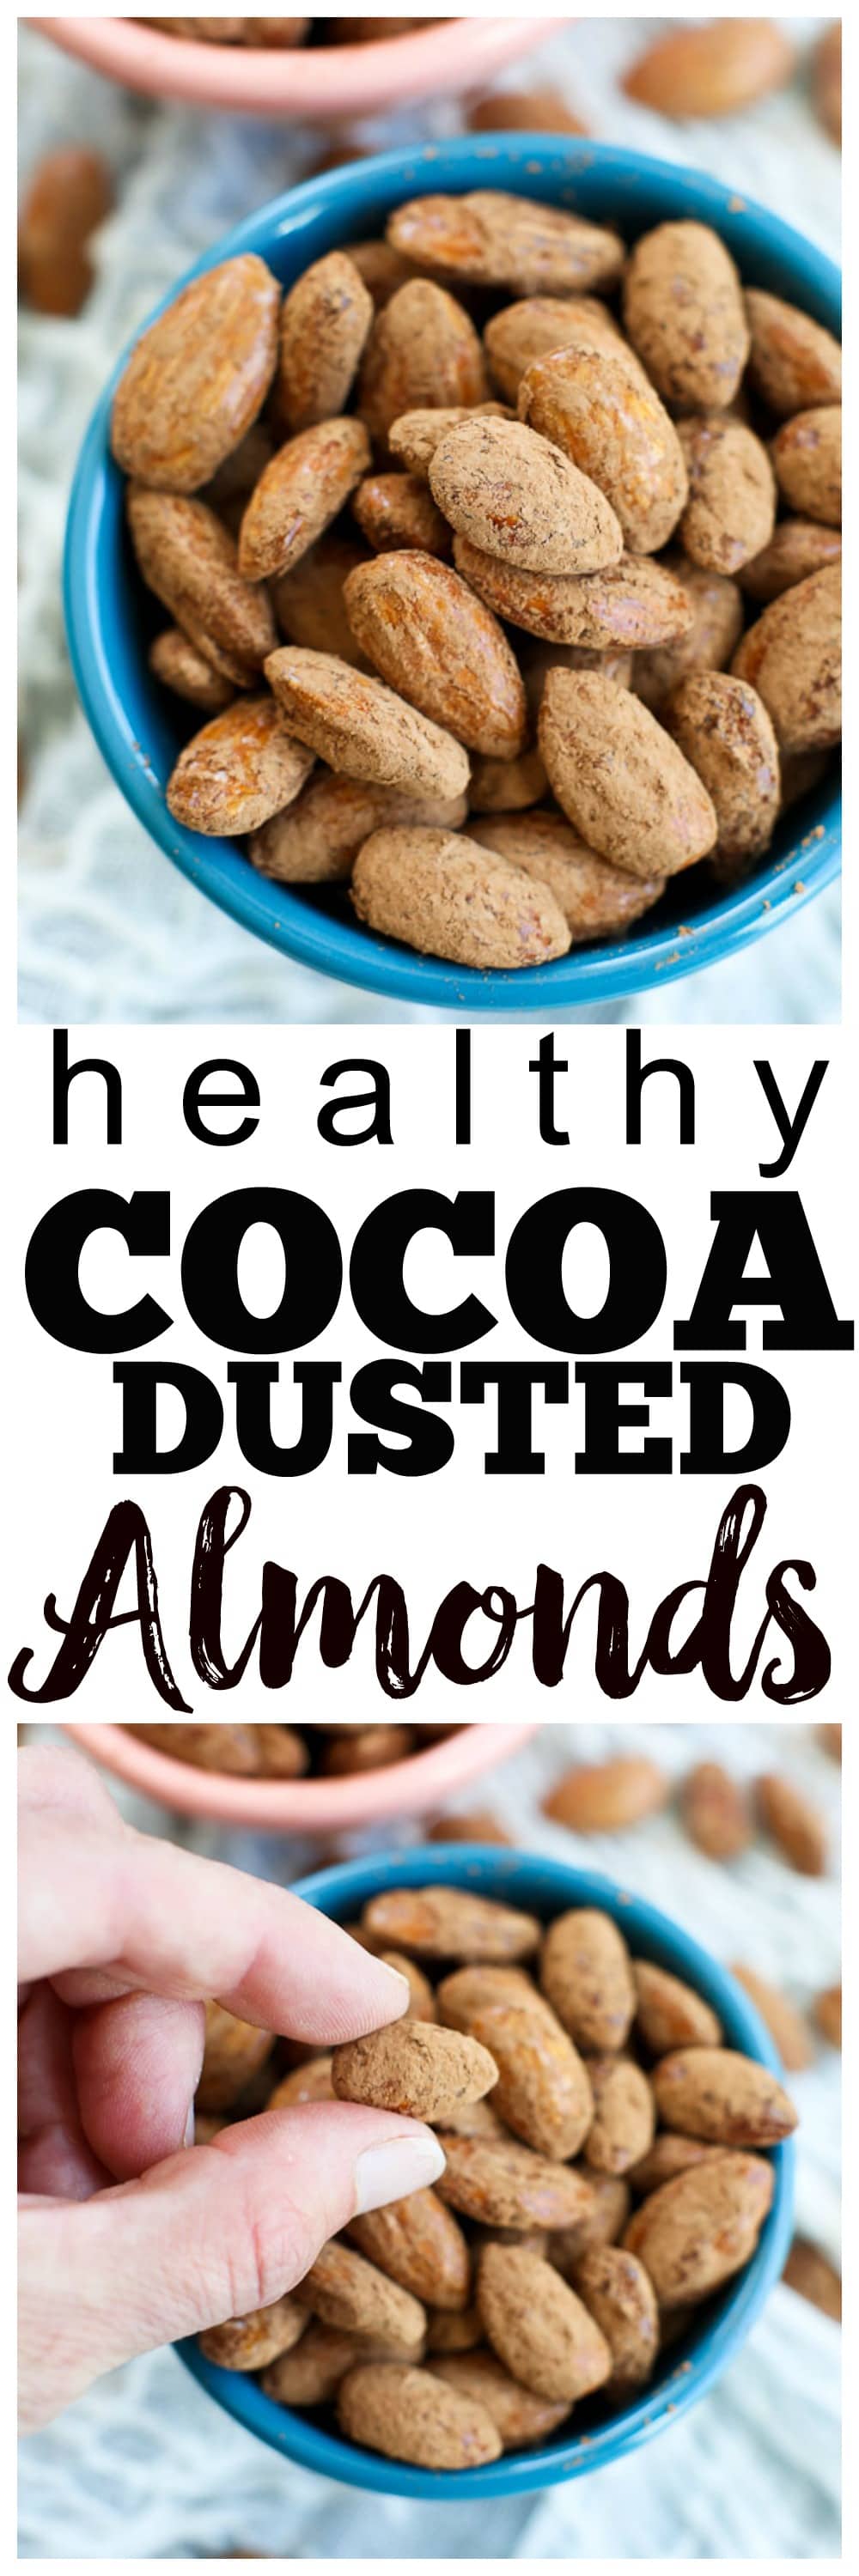 Cocoa Dusted Almonds recipe, healthy vegan gluten free snack ideas